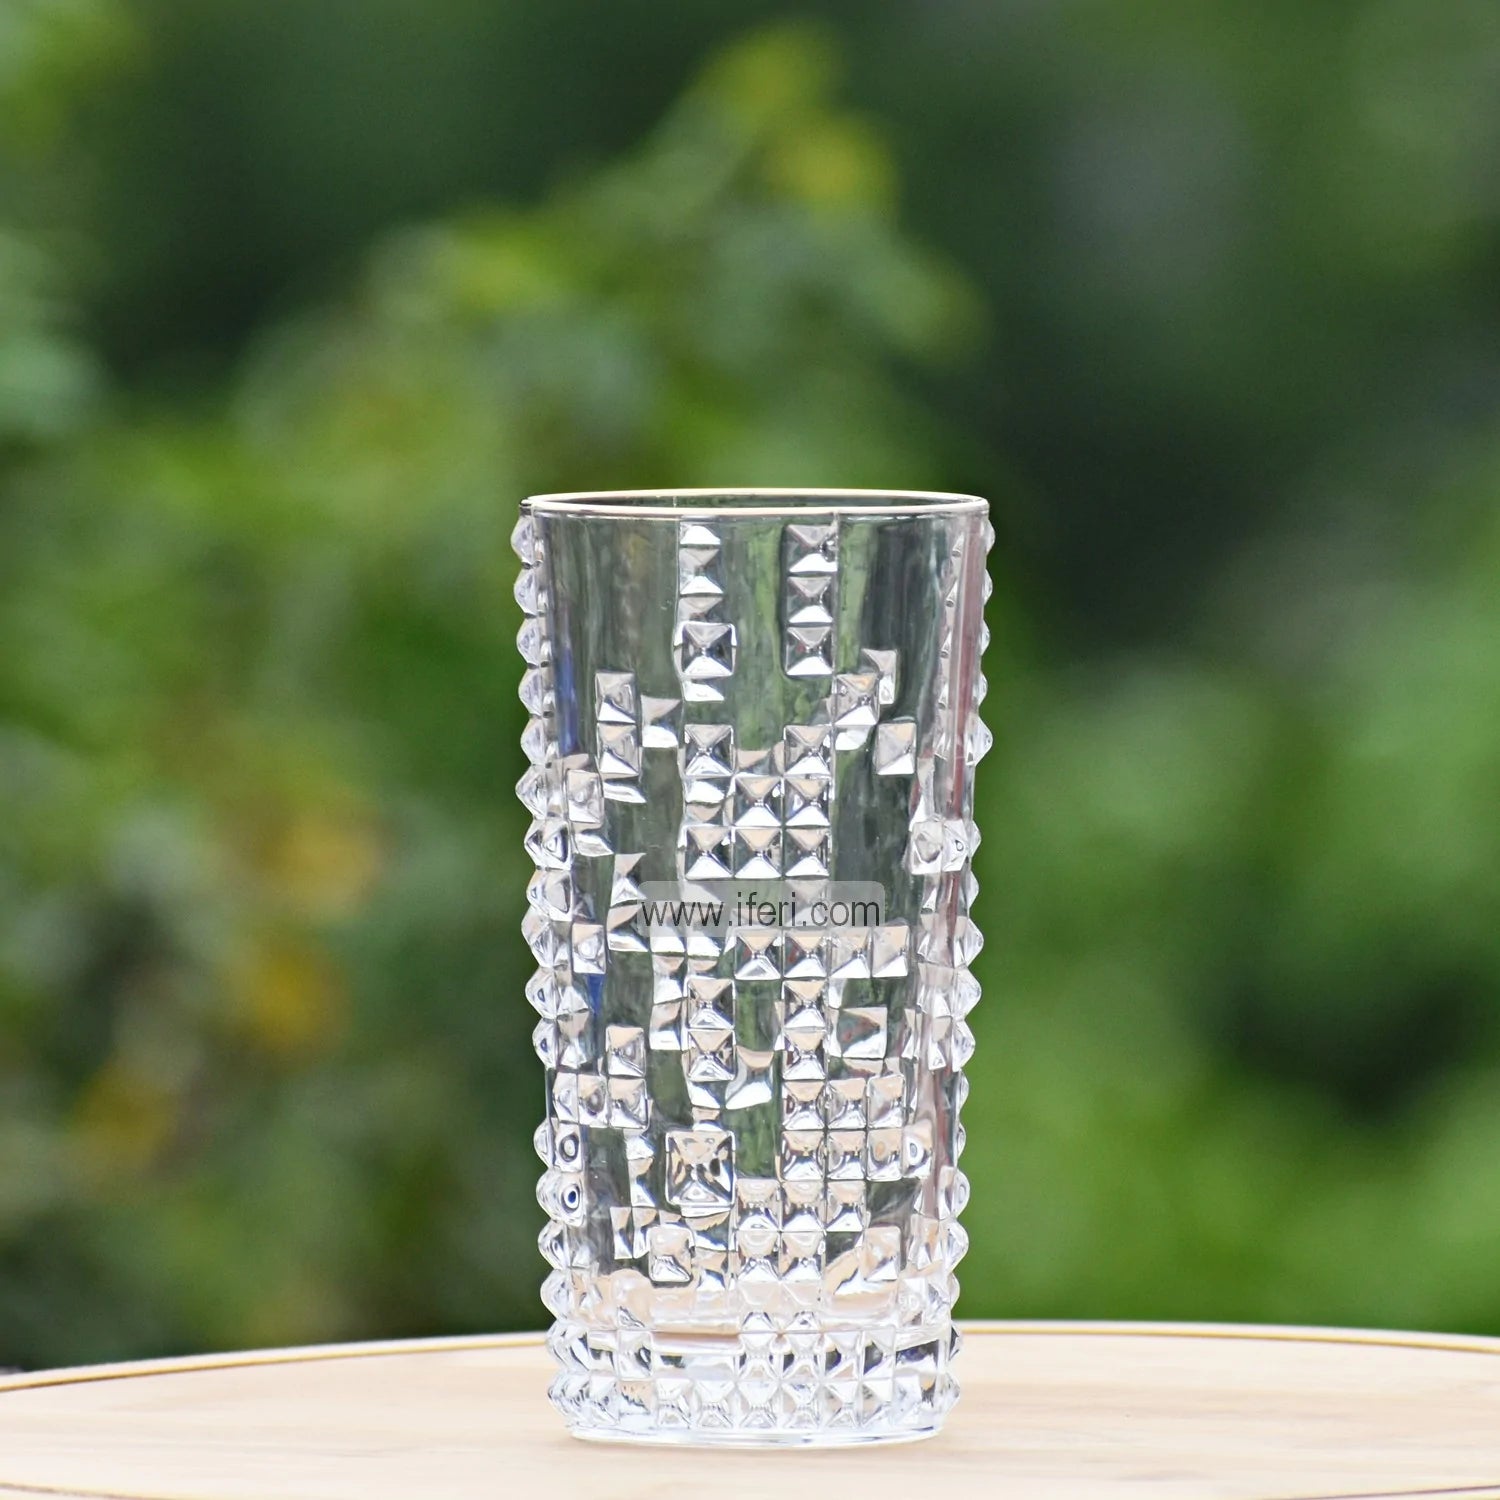 6 Pcs Water Juice Glass Set - সেল - EB0642 Price in Bangladesh - iferi.com